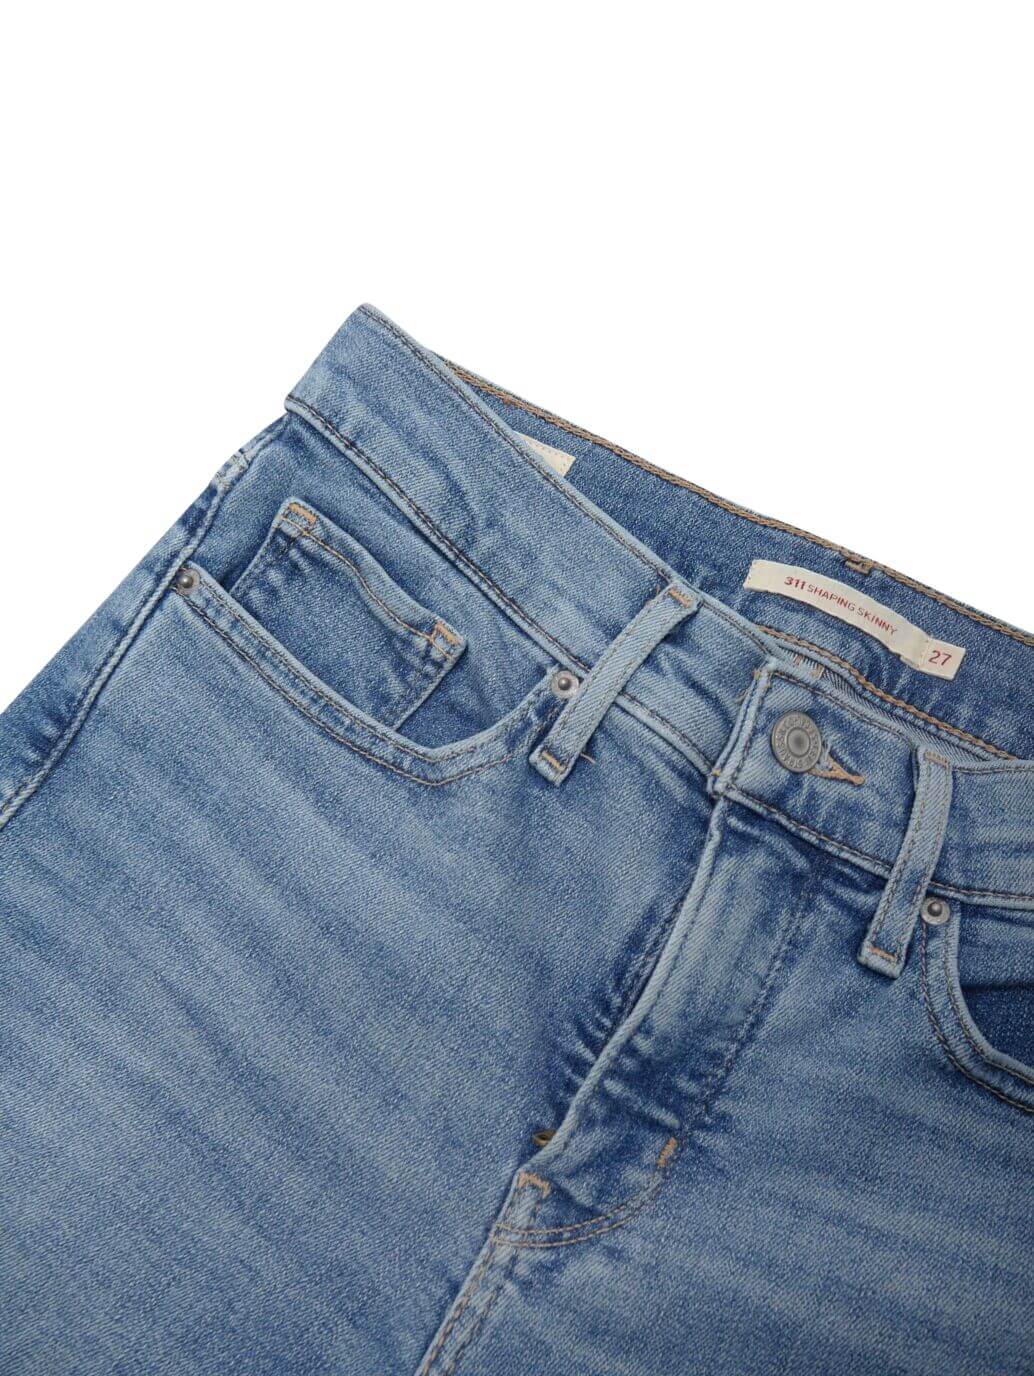 Levi's - 311 Shaping Skinny Jeans - Blue Wave Light